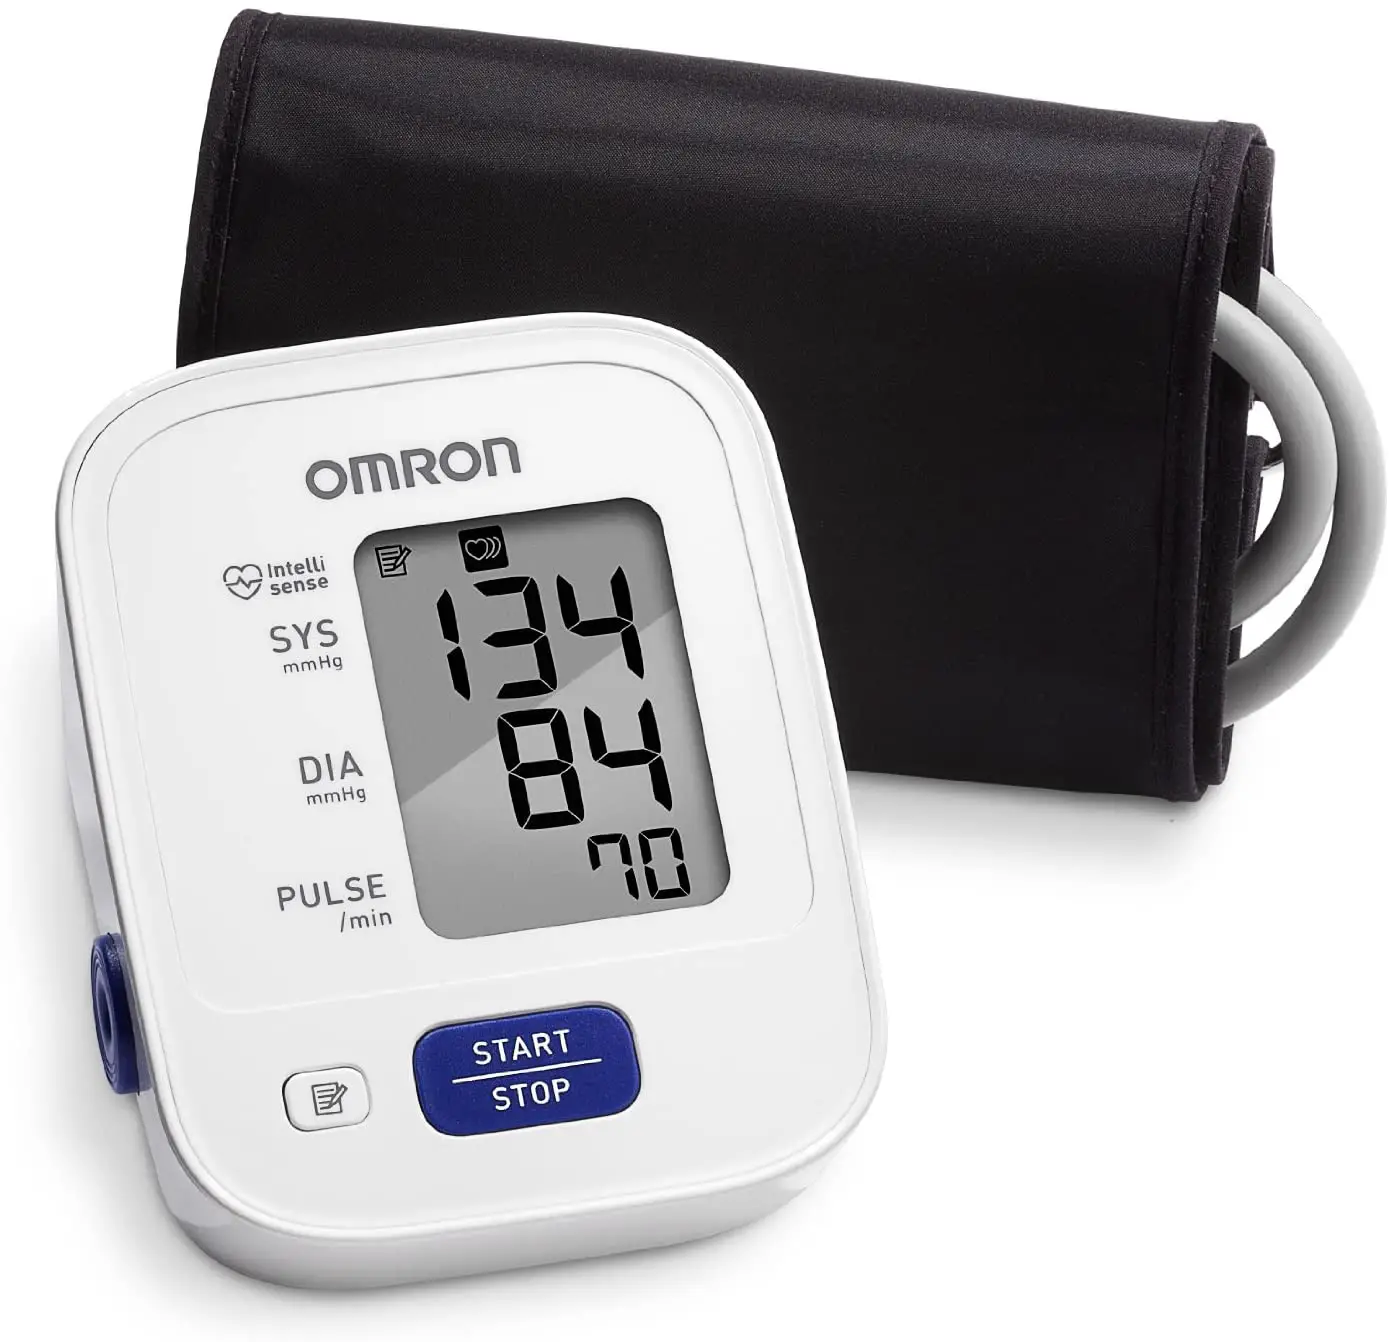 Omron 3 Series BP7100 (Upper Arm Blood Pressure Monitor) Manual